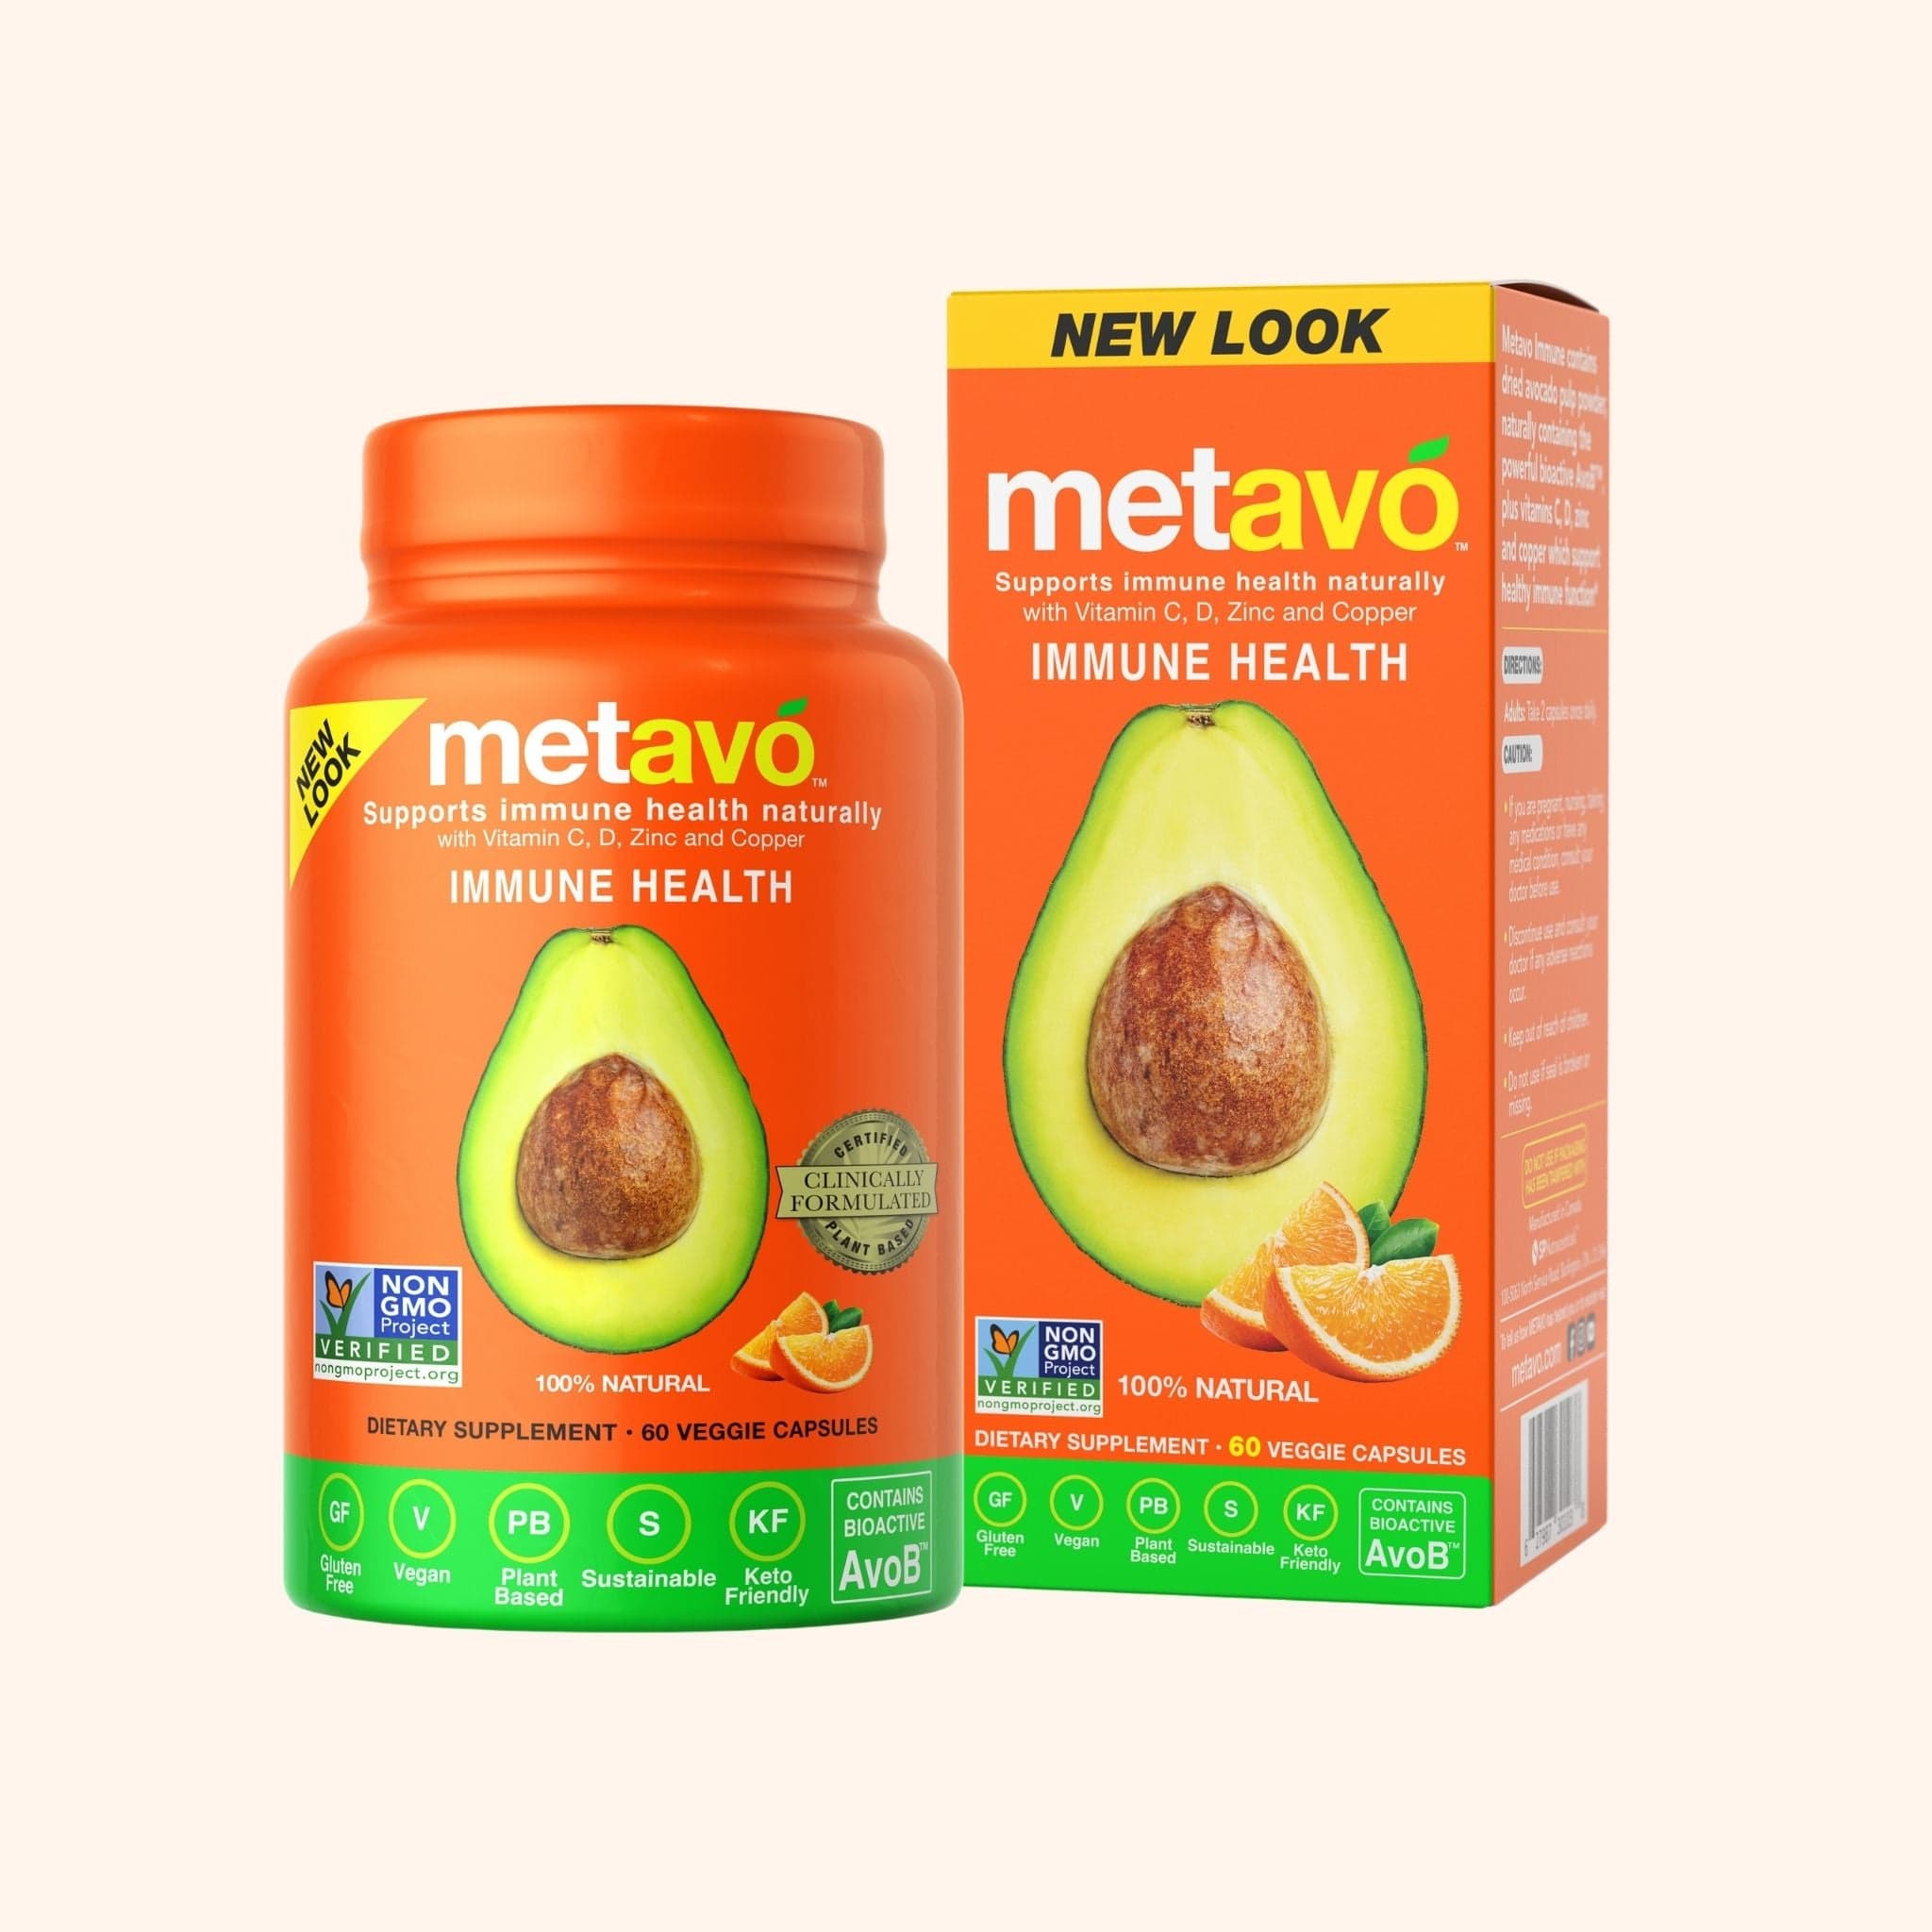 MetAvo Monthly Supply 60 Capsules Immune Health